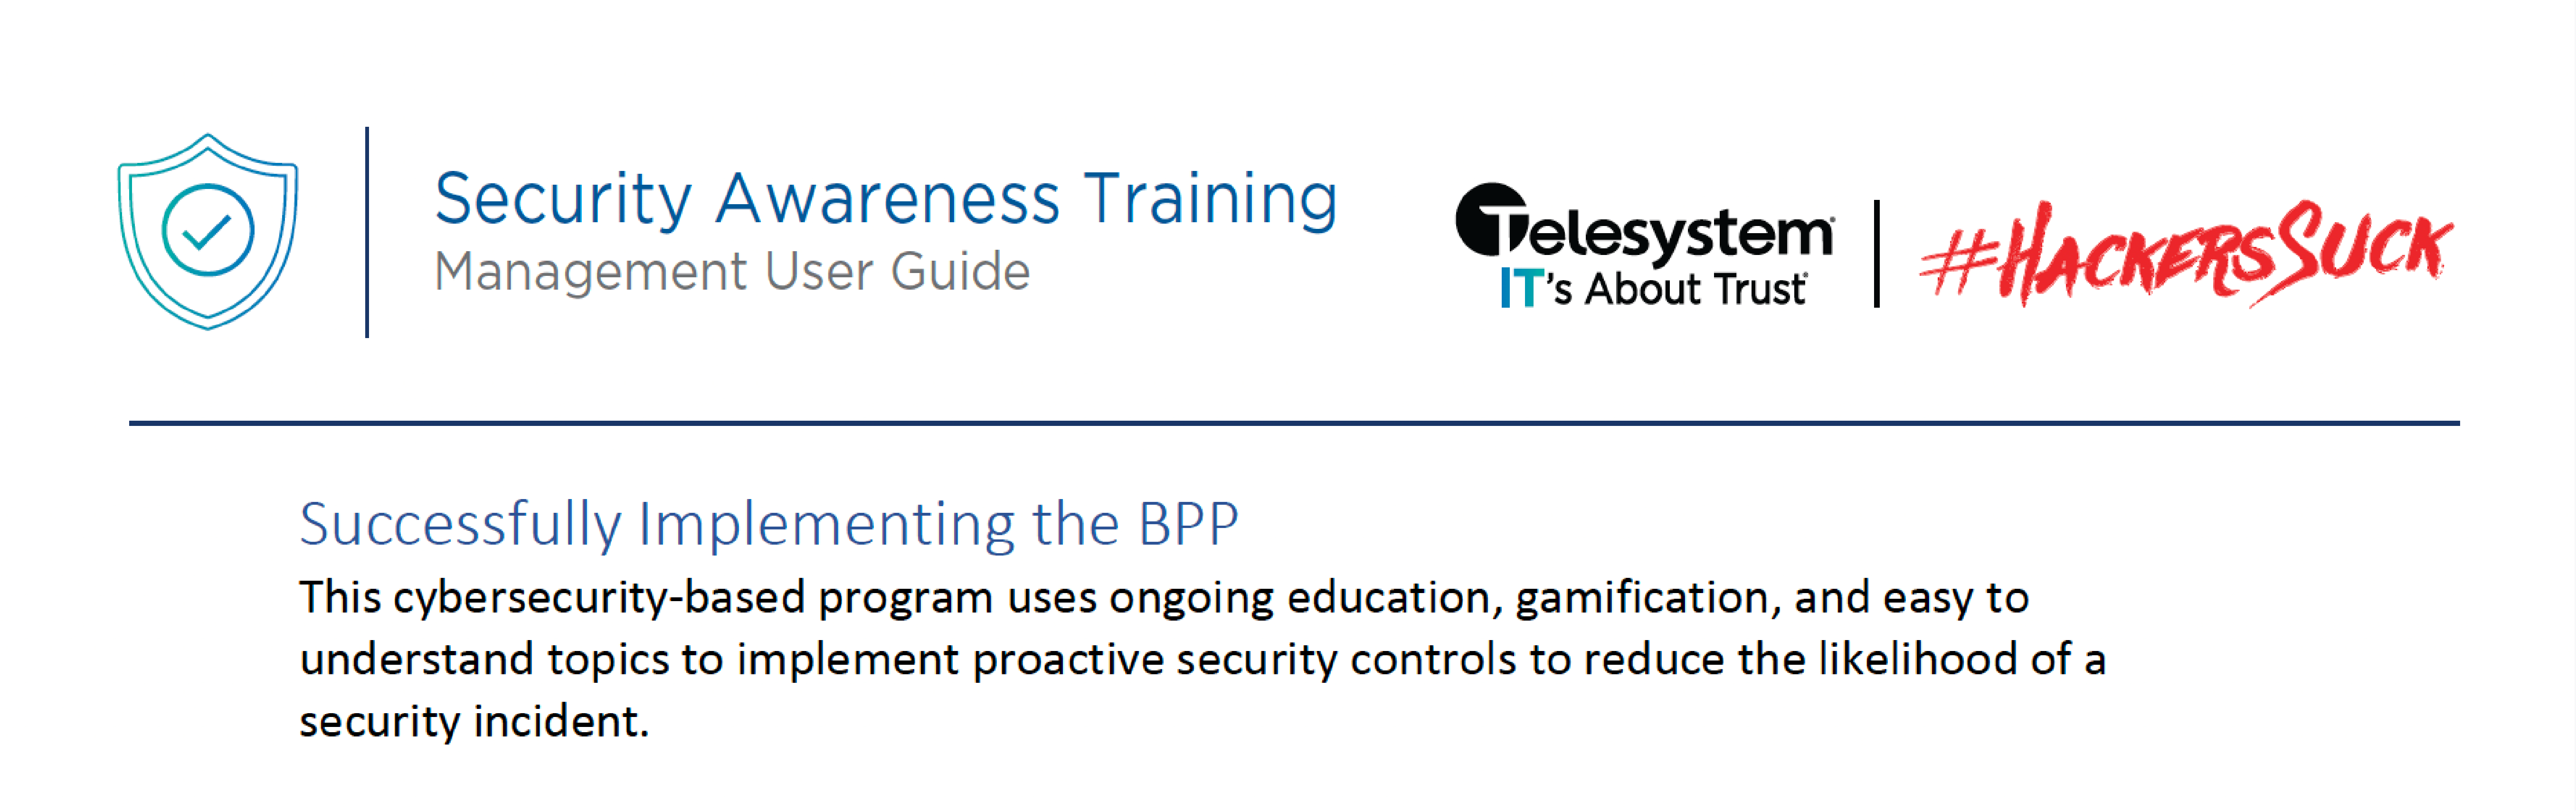 Security Awareness Training - Management User Guide Thumbnail